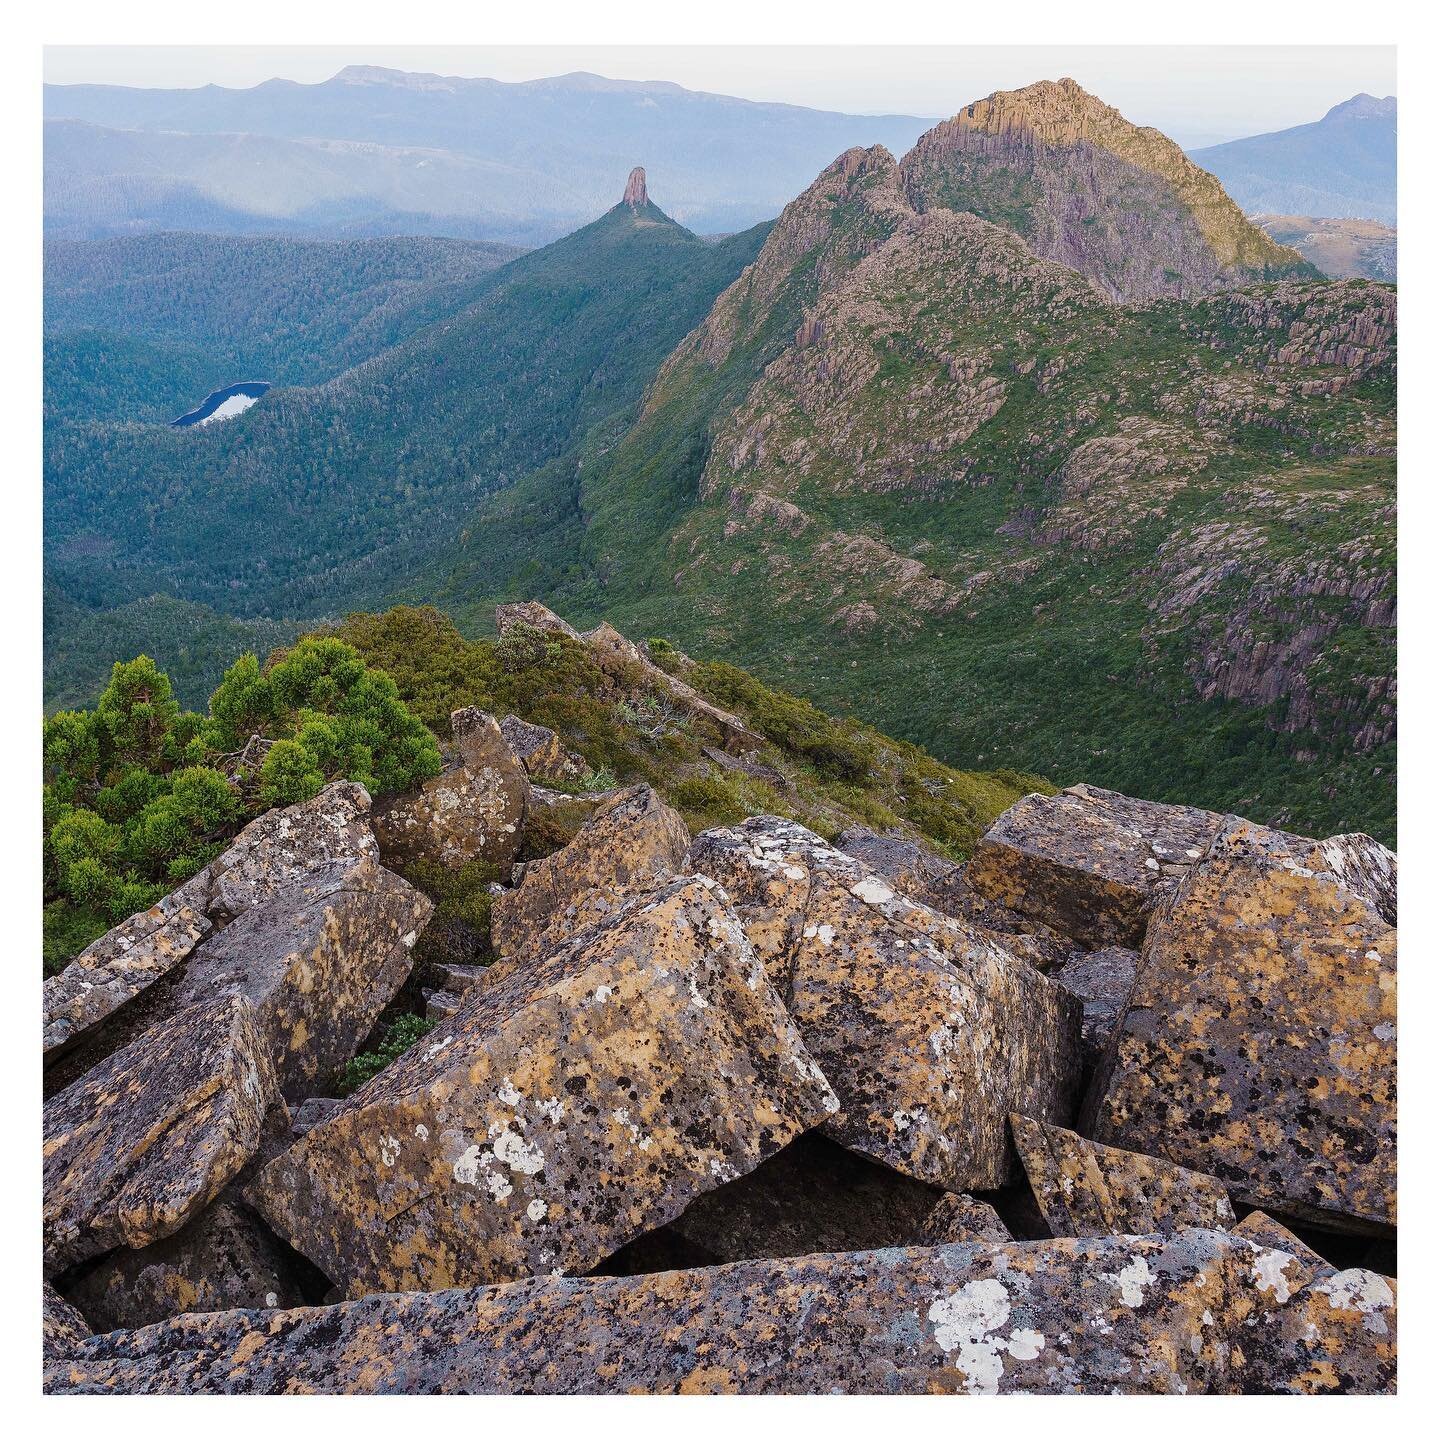 Last daylight on the ranges of Southwest National Park, February 2022.

#keeptassiewild #tasmania